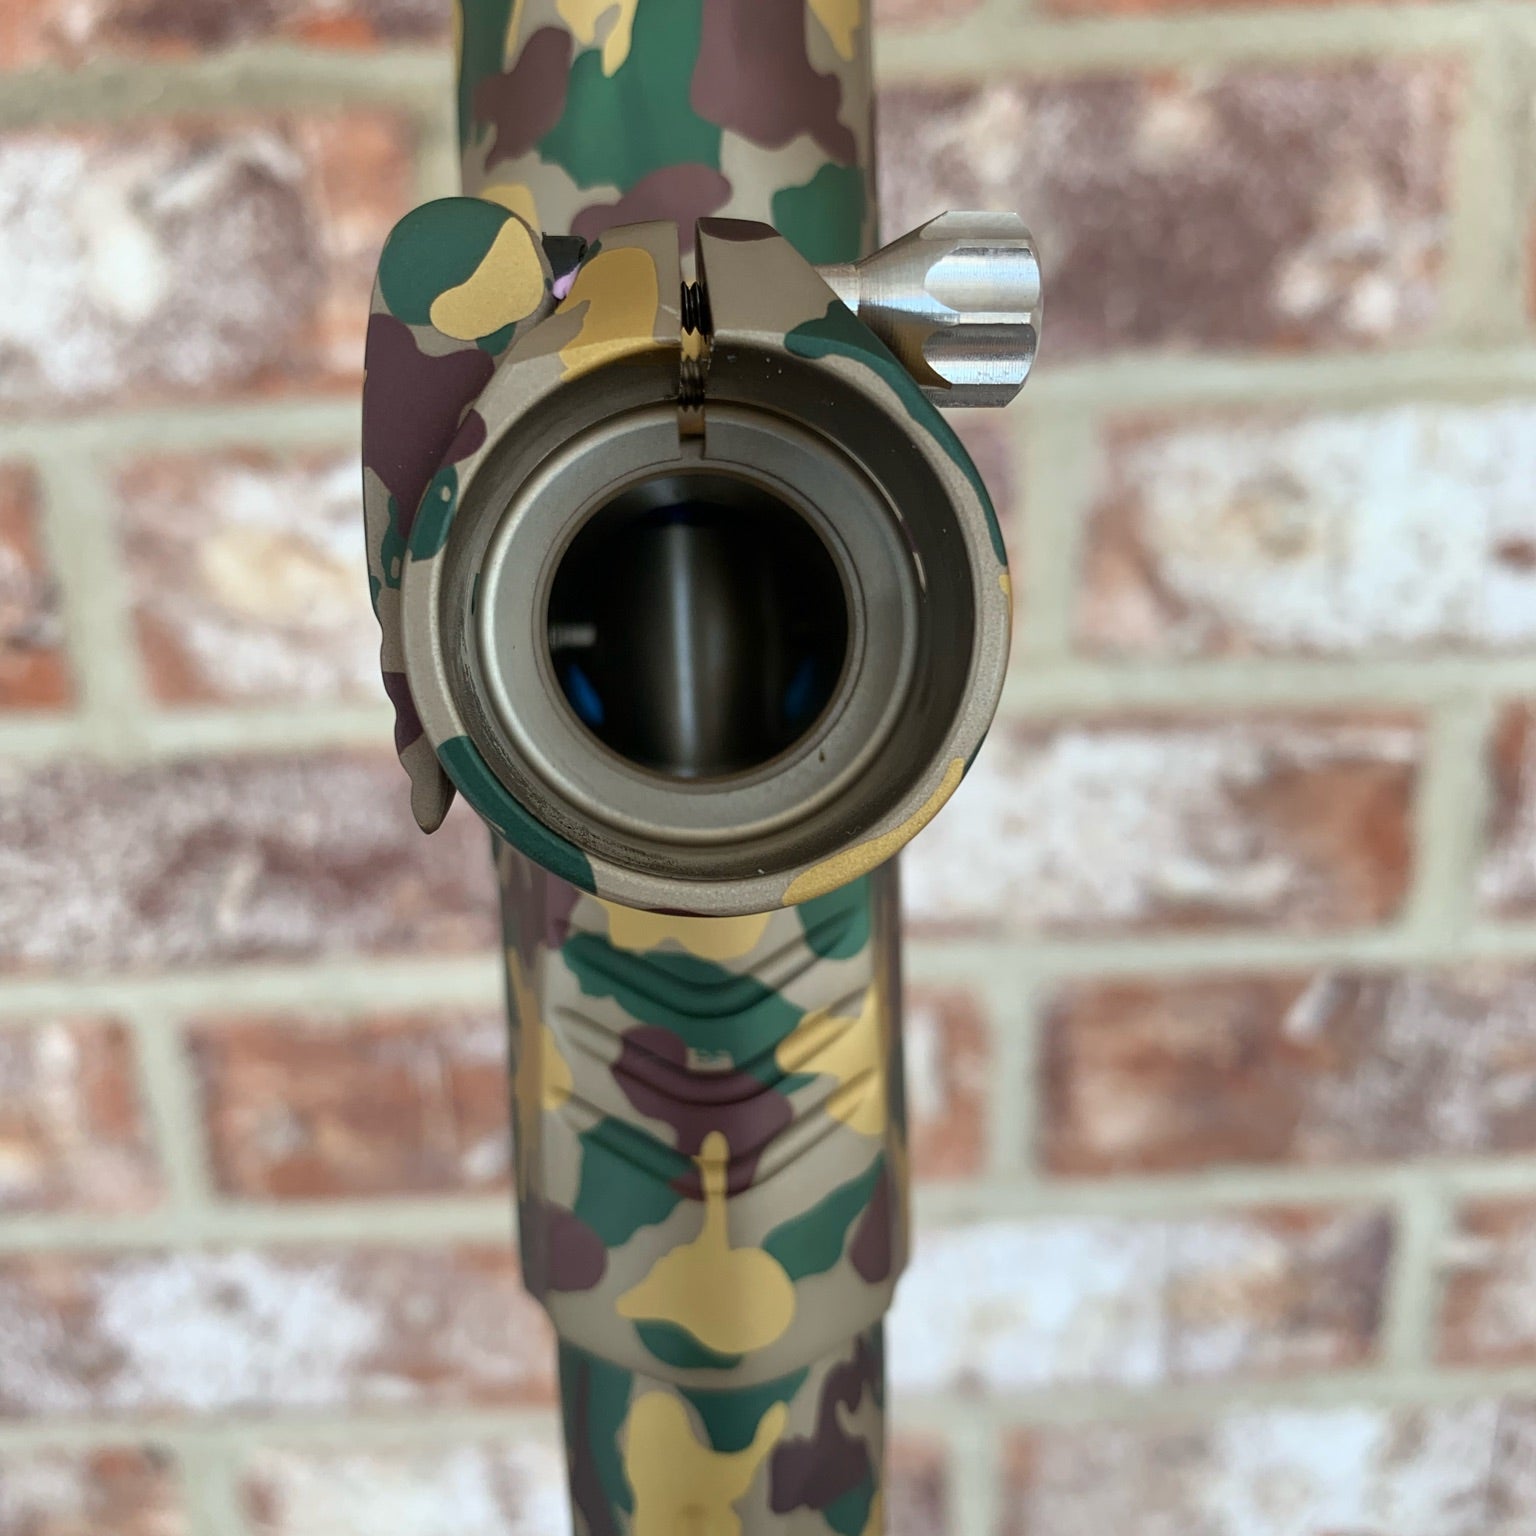 Used SP Shocker Amp Paintball Gun - LE Woodland Camo #9